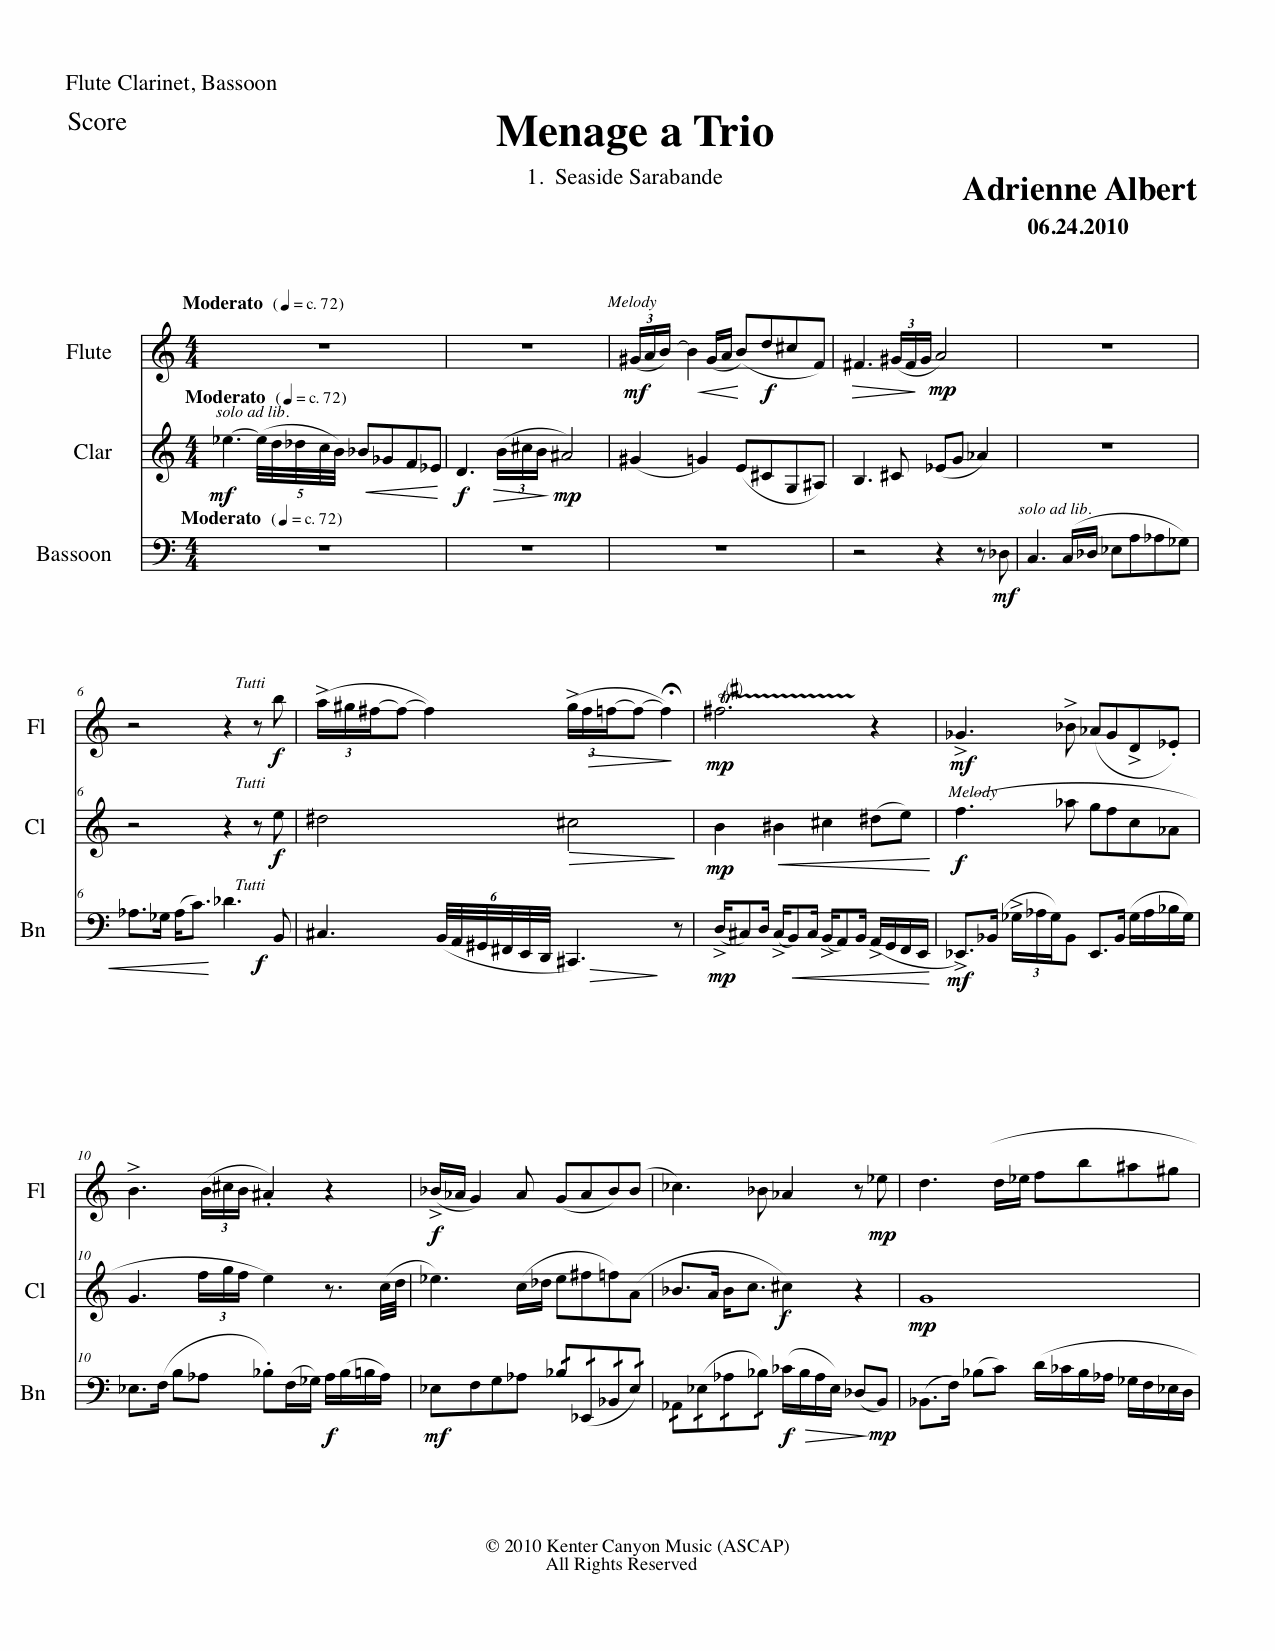 Menage a Trio Example Score Image